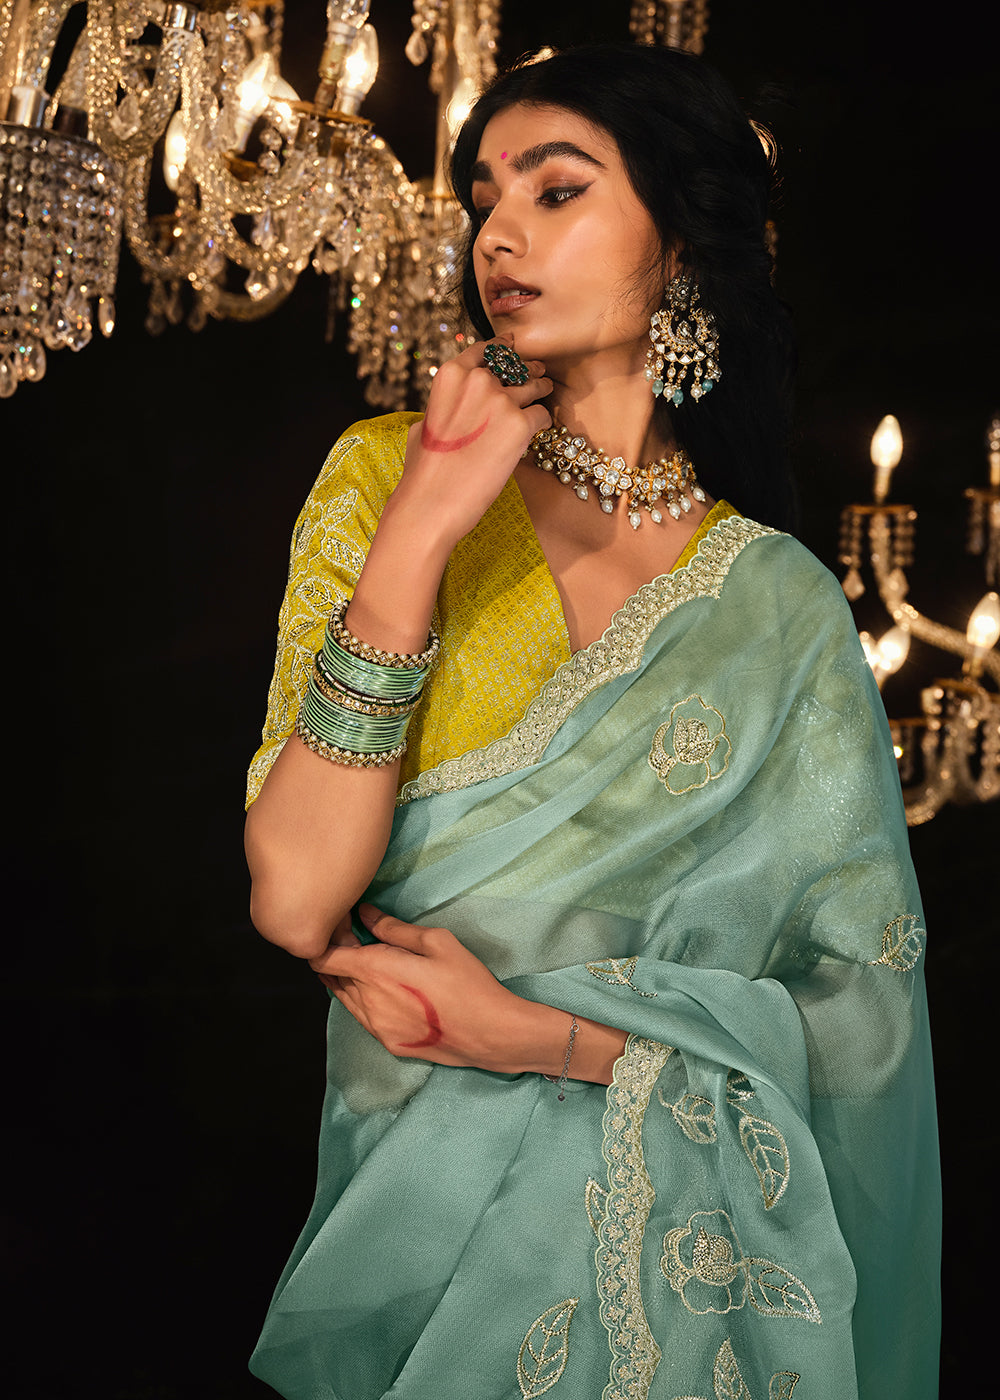 Buy Now Fancy Powder Blue Embroidered Designer Wedding Wear Saree Online in USA, UK, Canada & Worldwide at Empress Clothing.